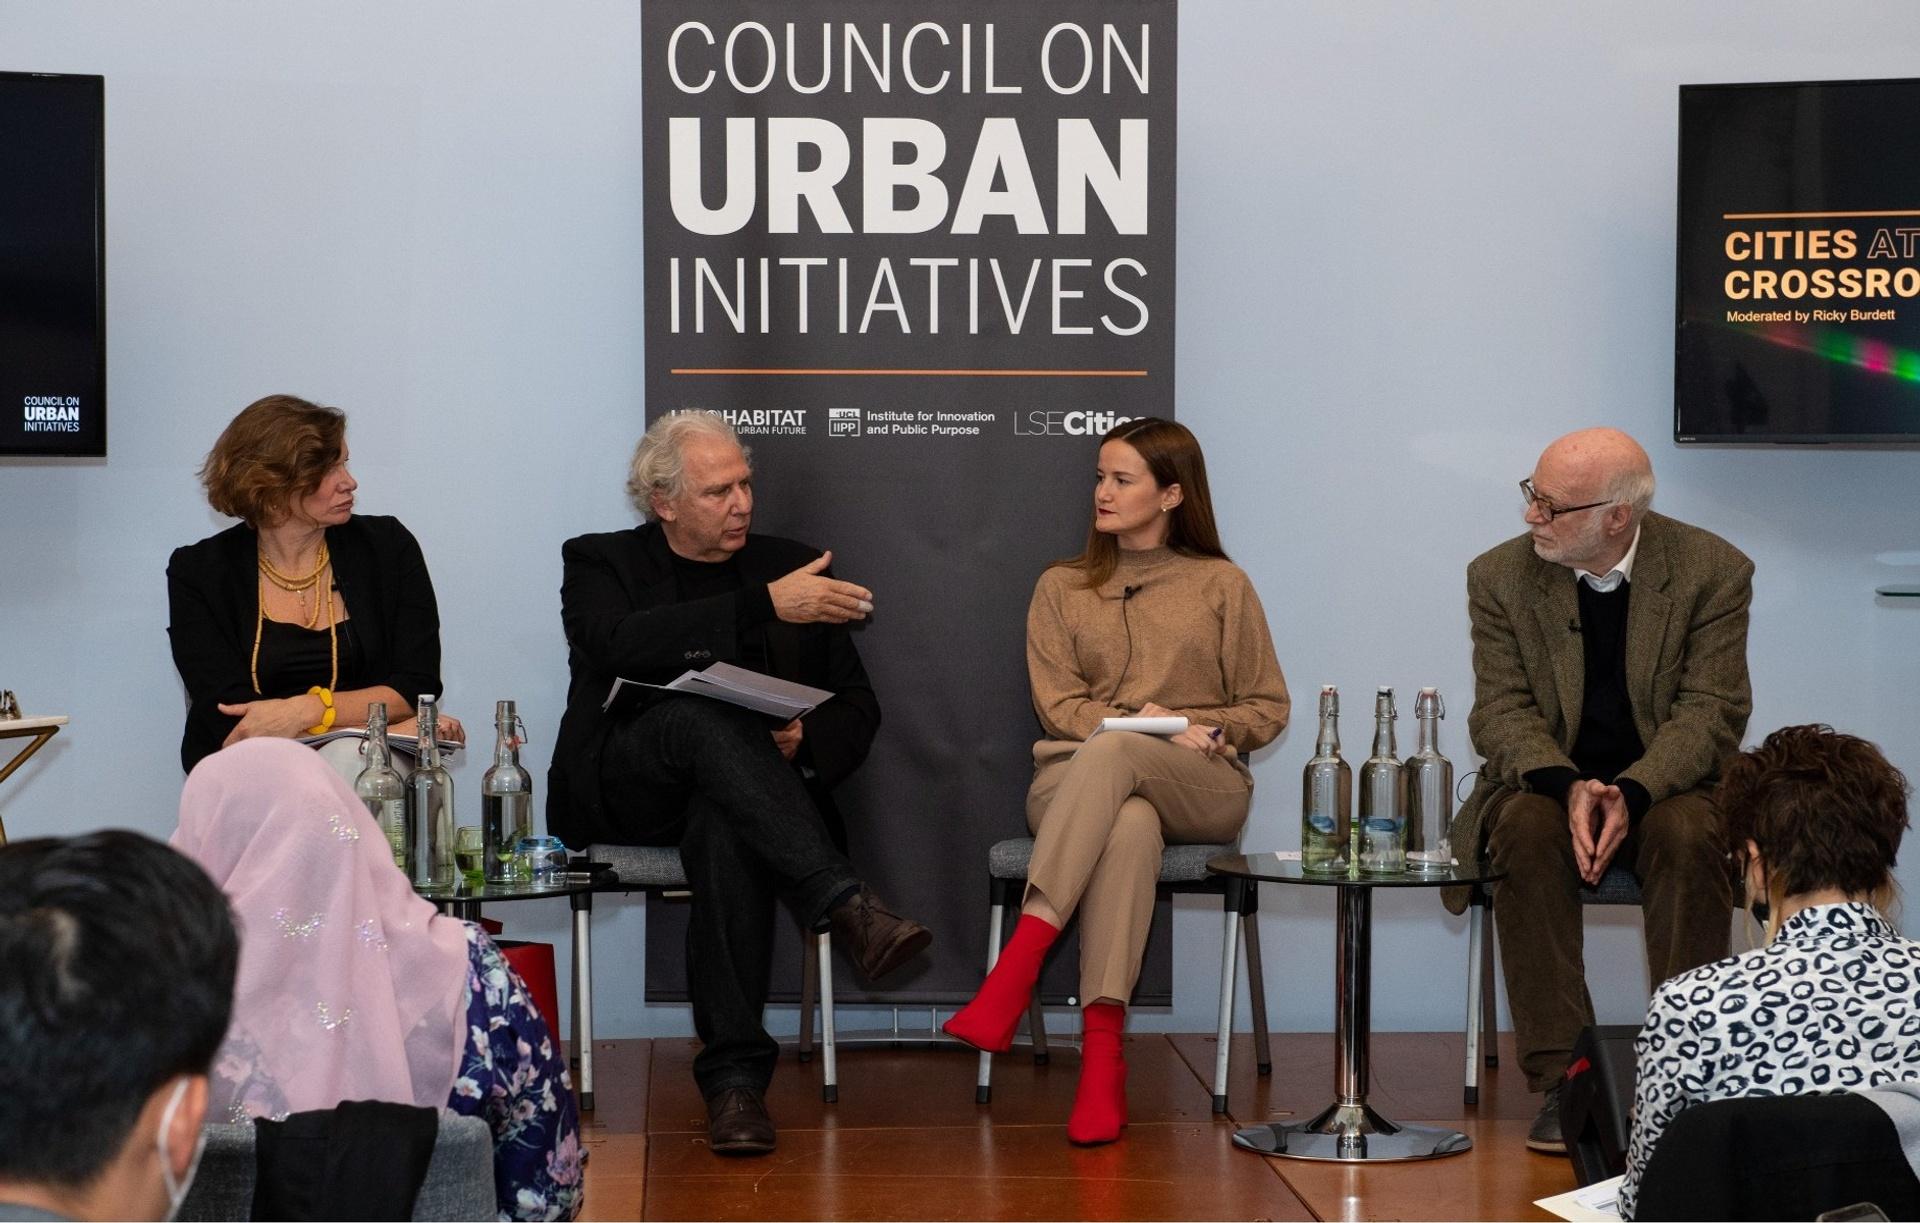 Mariana Mazzucato, Ricky Burdett, Soledad Núñez and Richard Sennett speak at the Council on Urban Initiatives launch